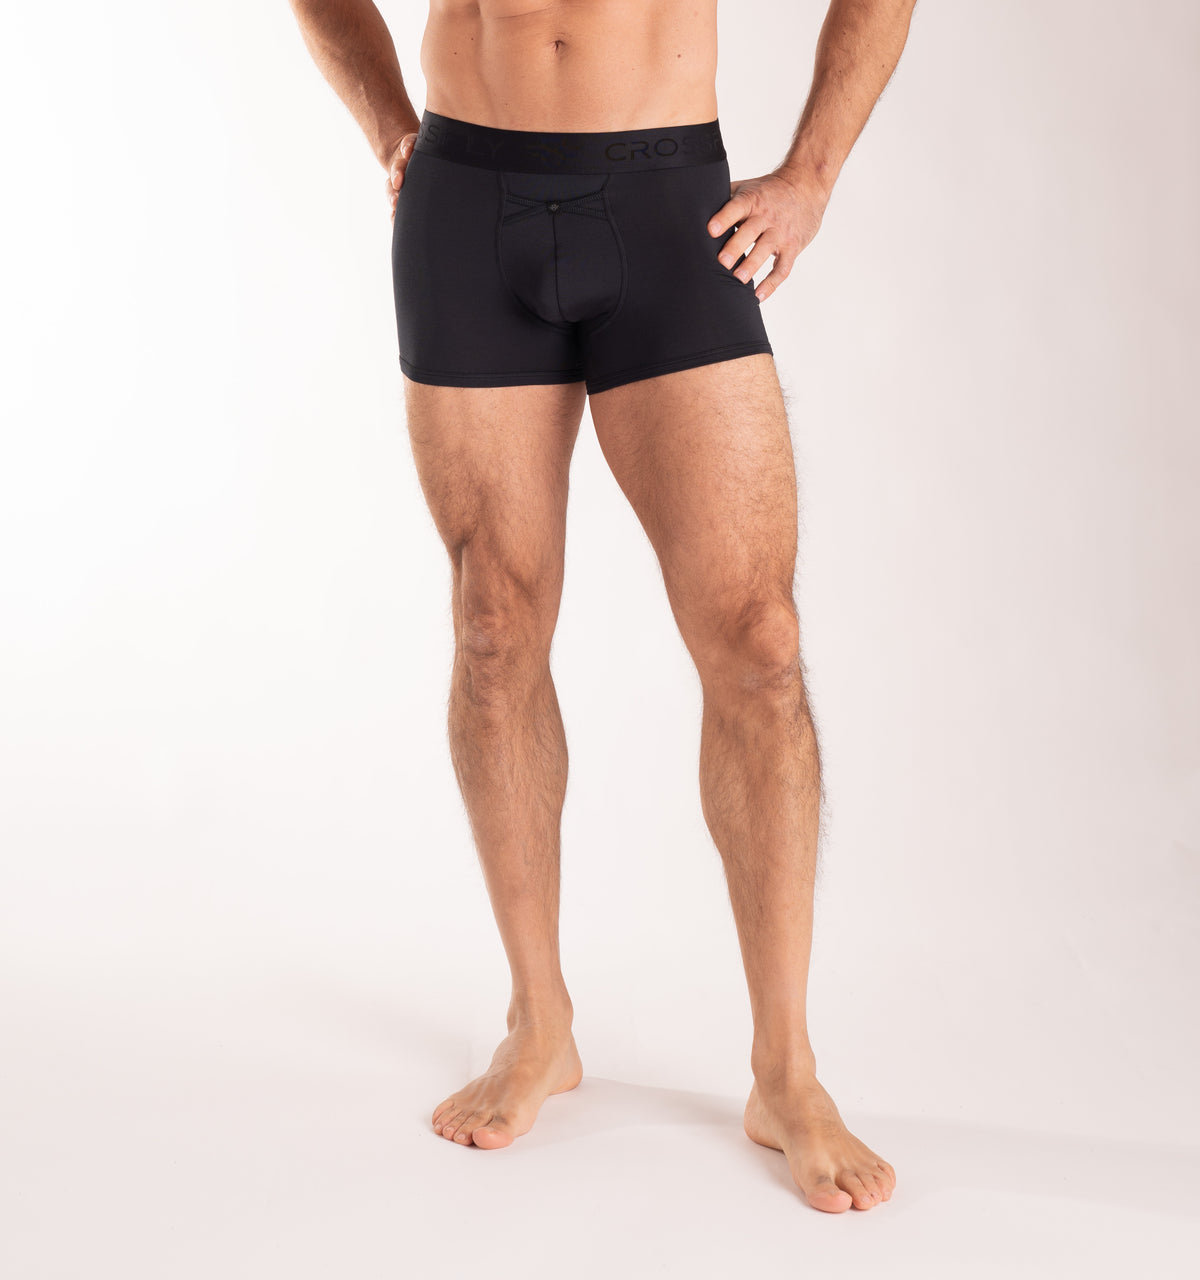 The Most Comfortable Underwear for Men - Crossfly